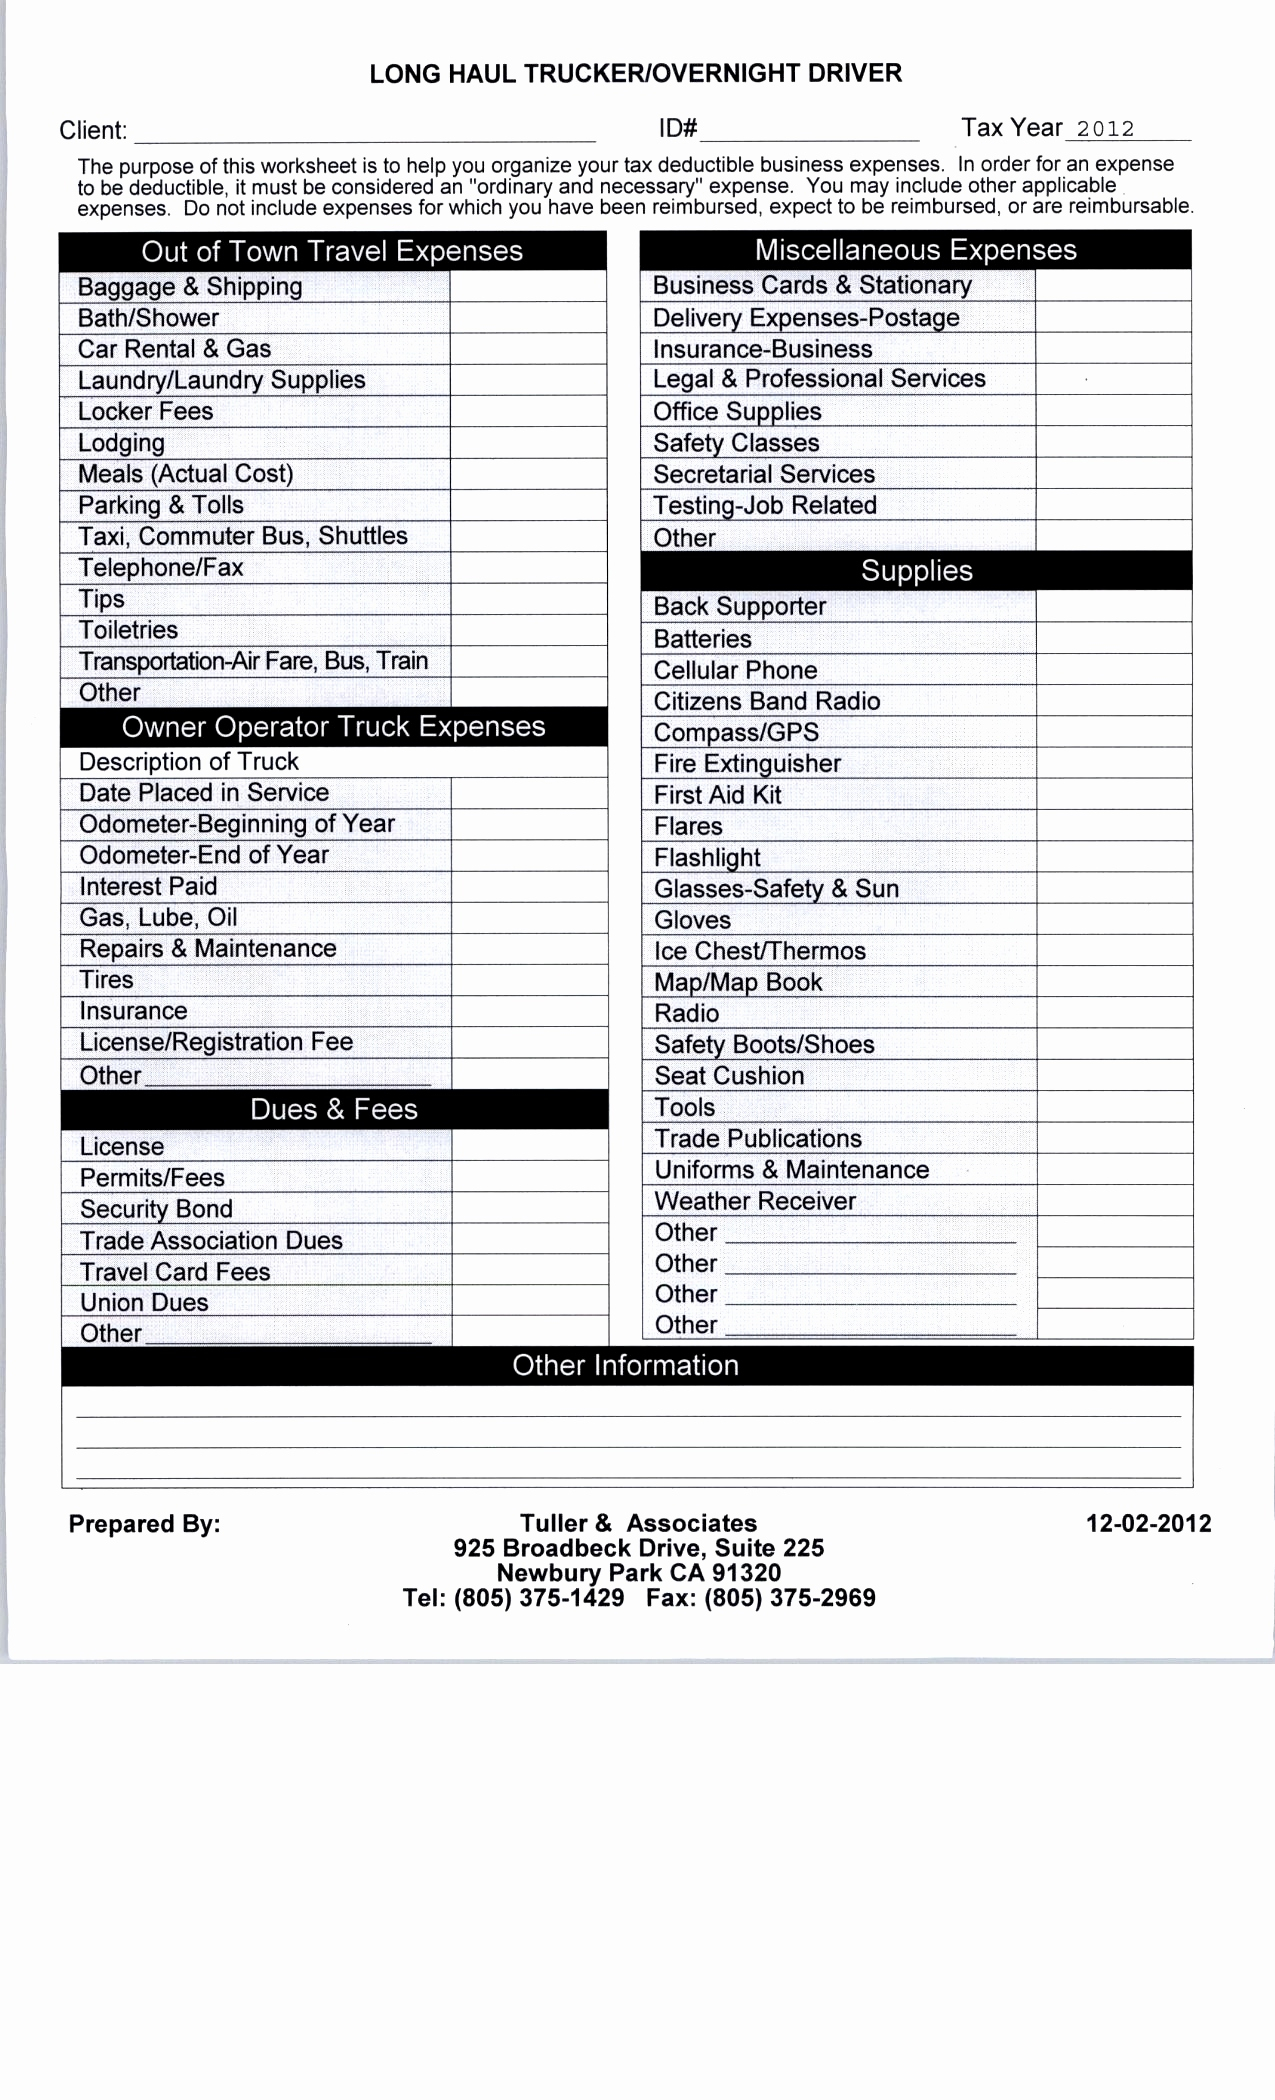 Driver Schedule Spreadsheet For Schedule C Expenses Spreadsheet Truck Driver Expense Unique Invoice